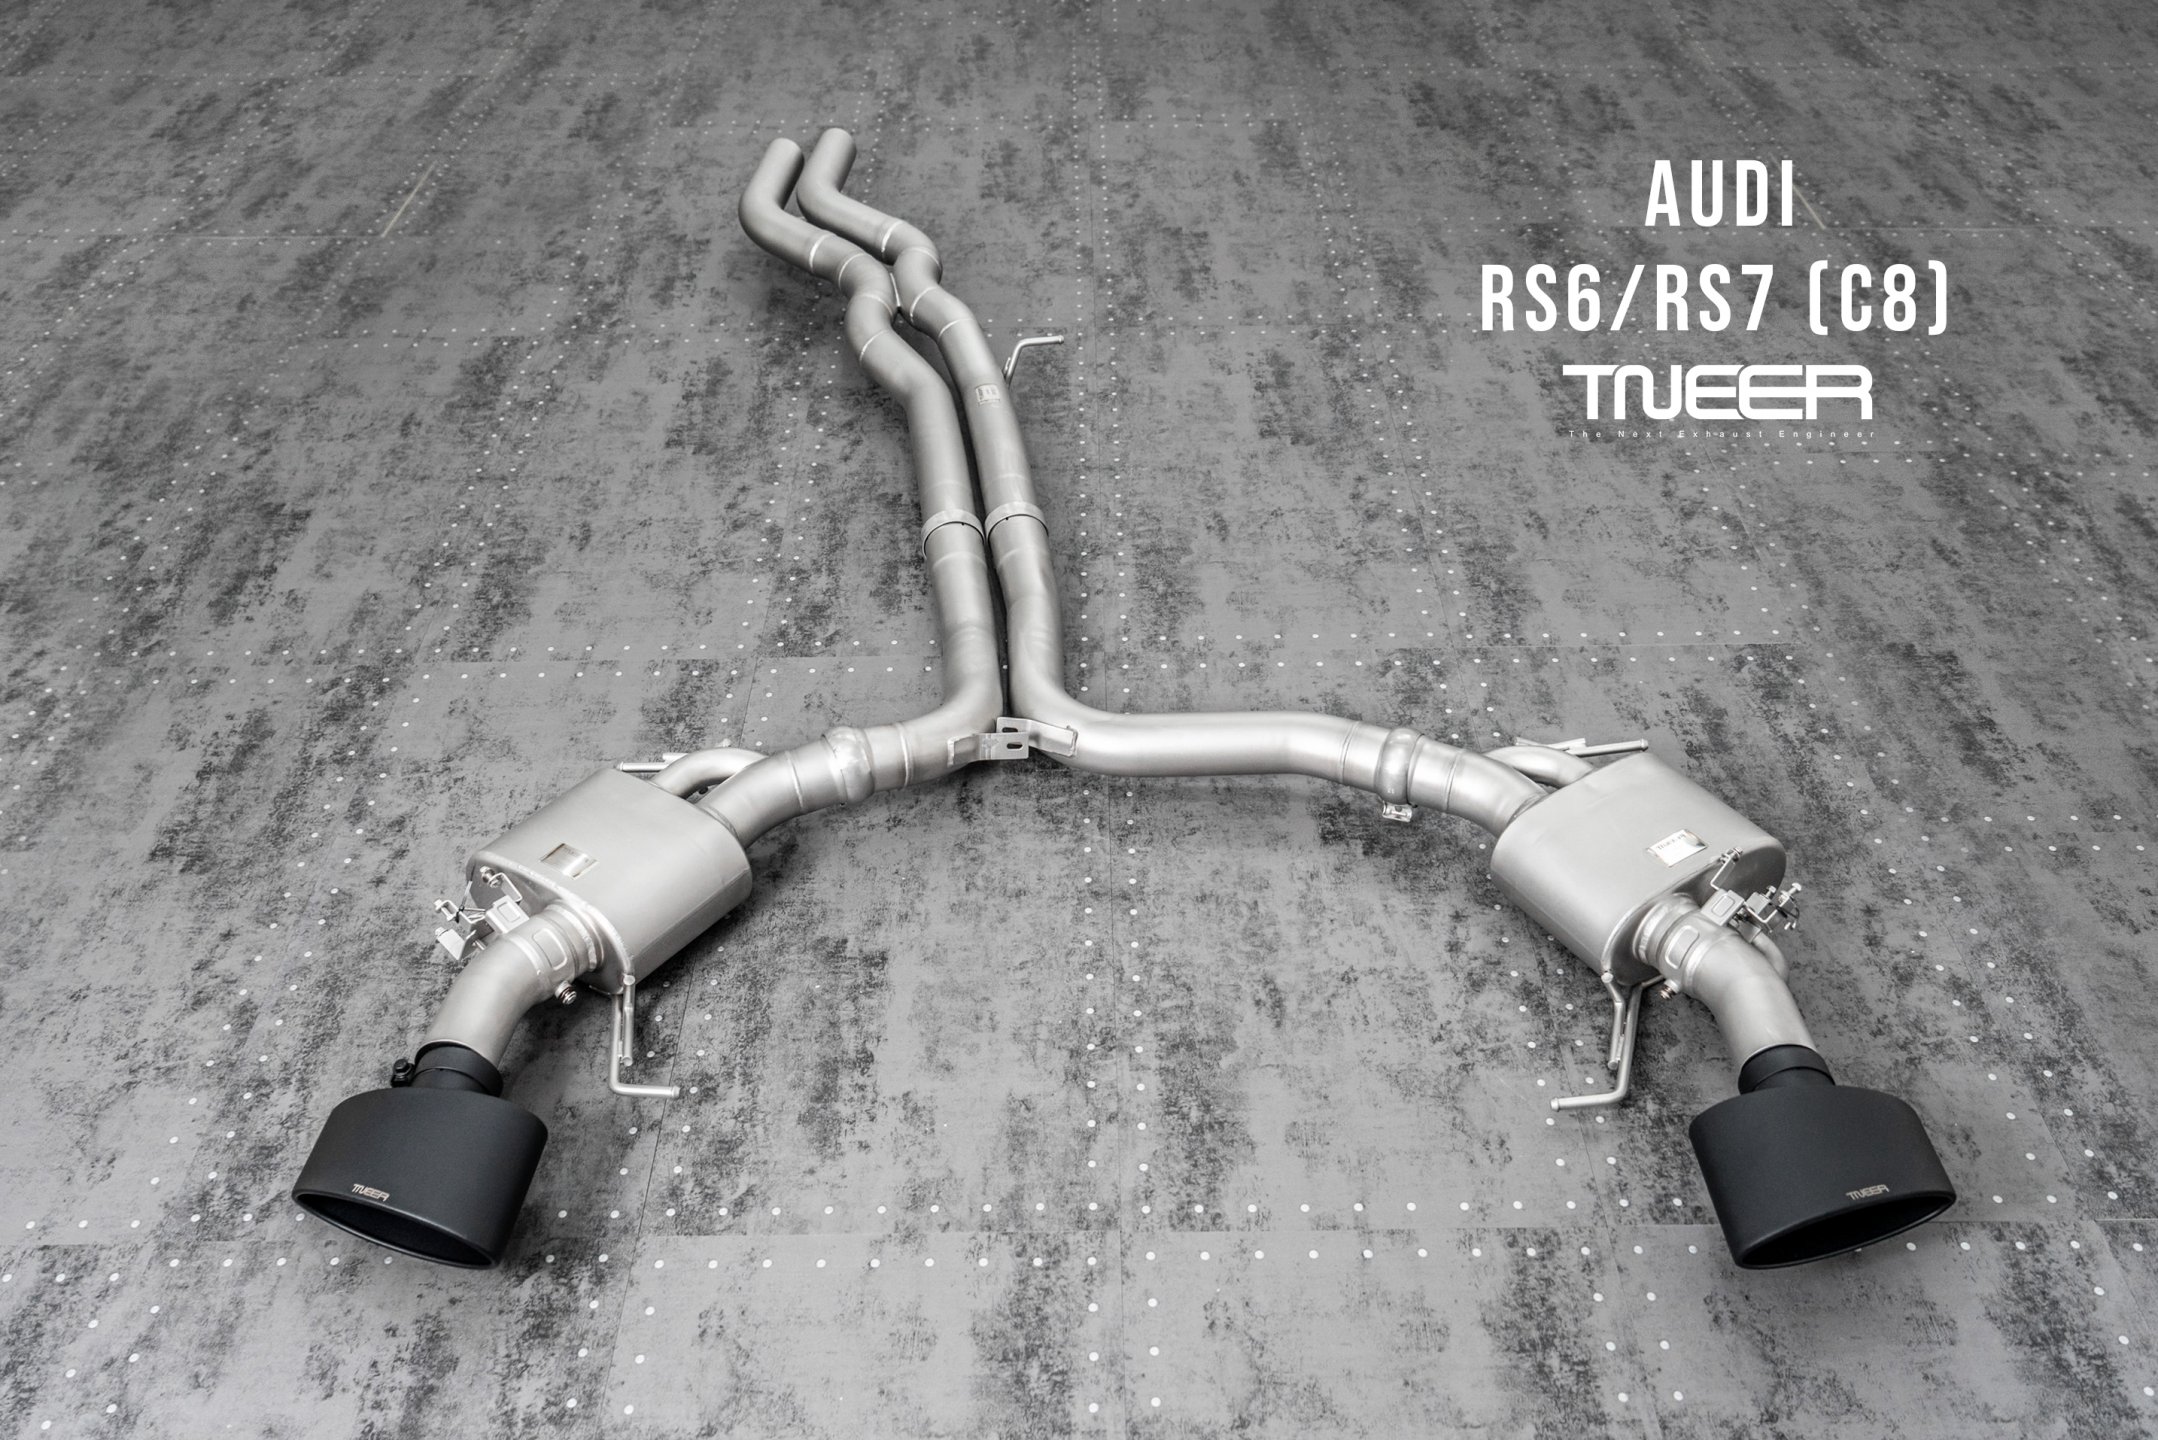 Audi RS7 (C8) 4.0 TFSI V8 TNEER Downpipes